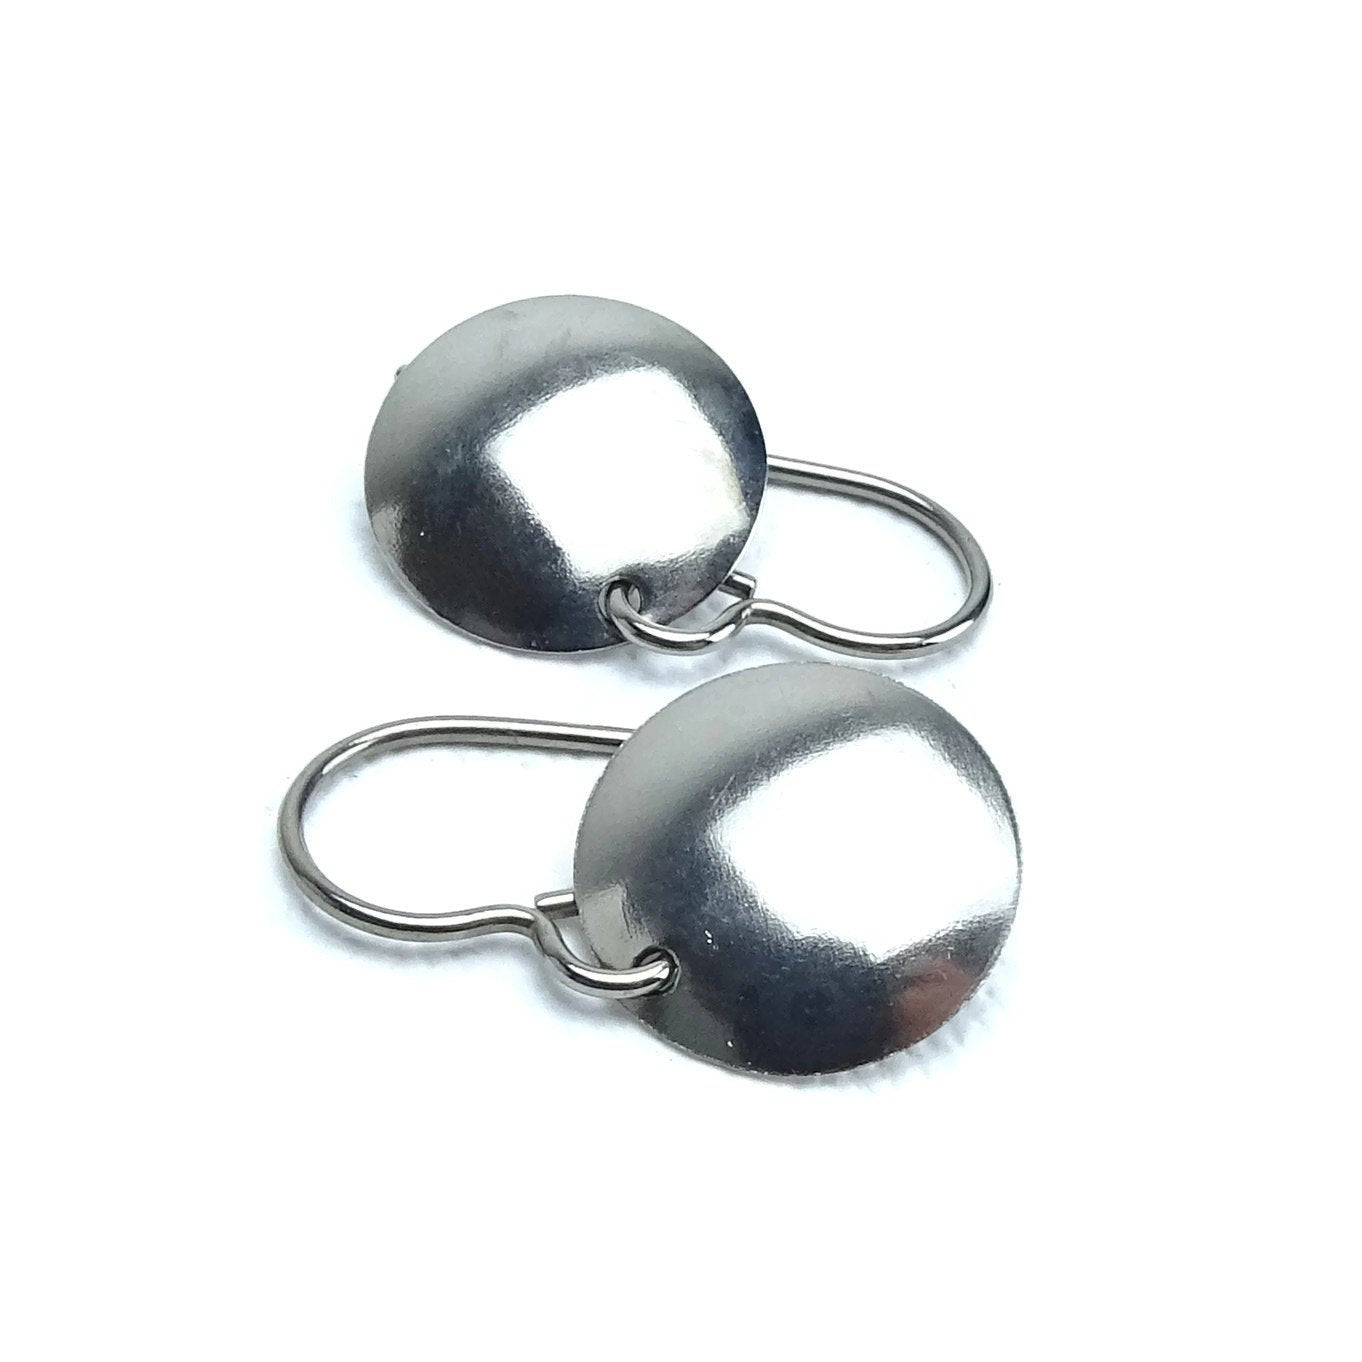 Titanium Earrings Domed Disc, Small Circle Niobium Earrings, Nickel Free Hypoallergenic Discs, Earrings for Sensitive Ears, Titanium Jewelry